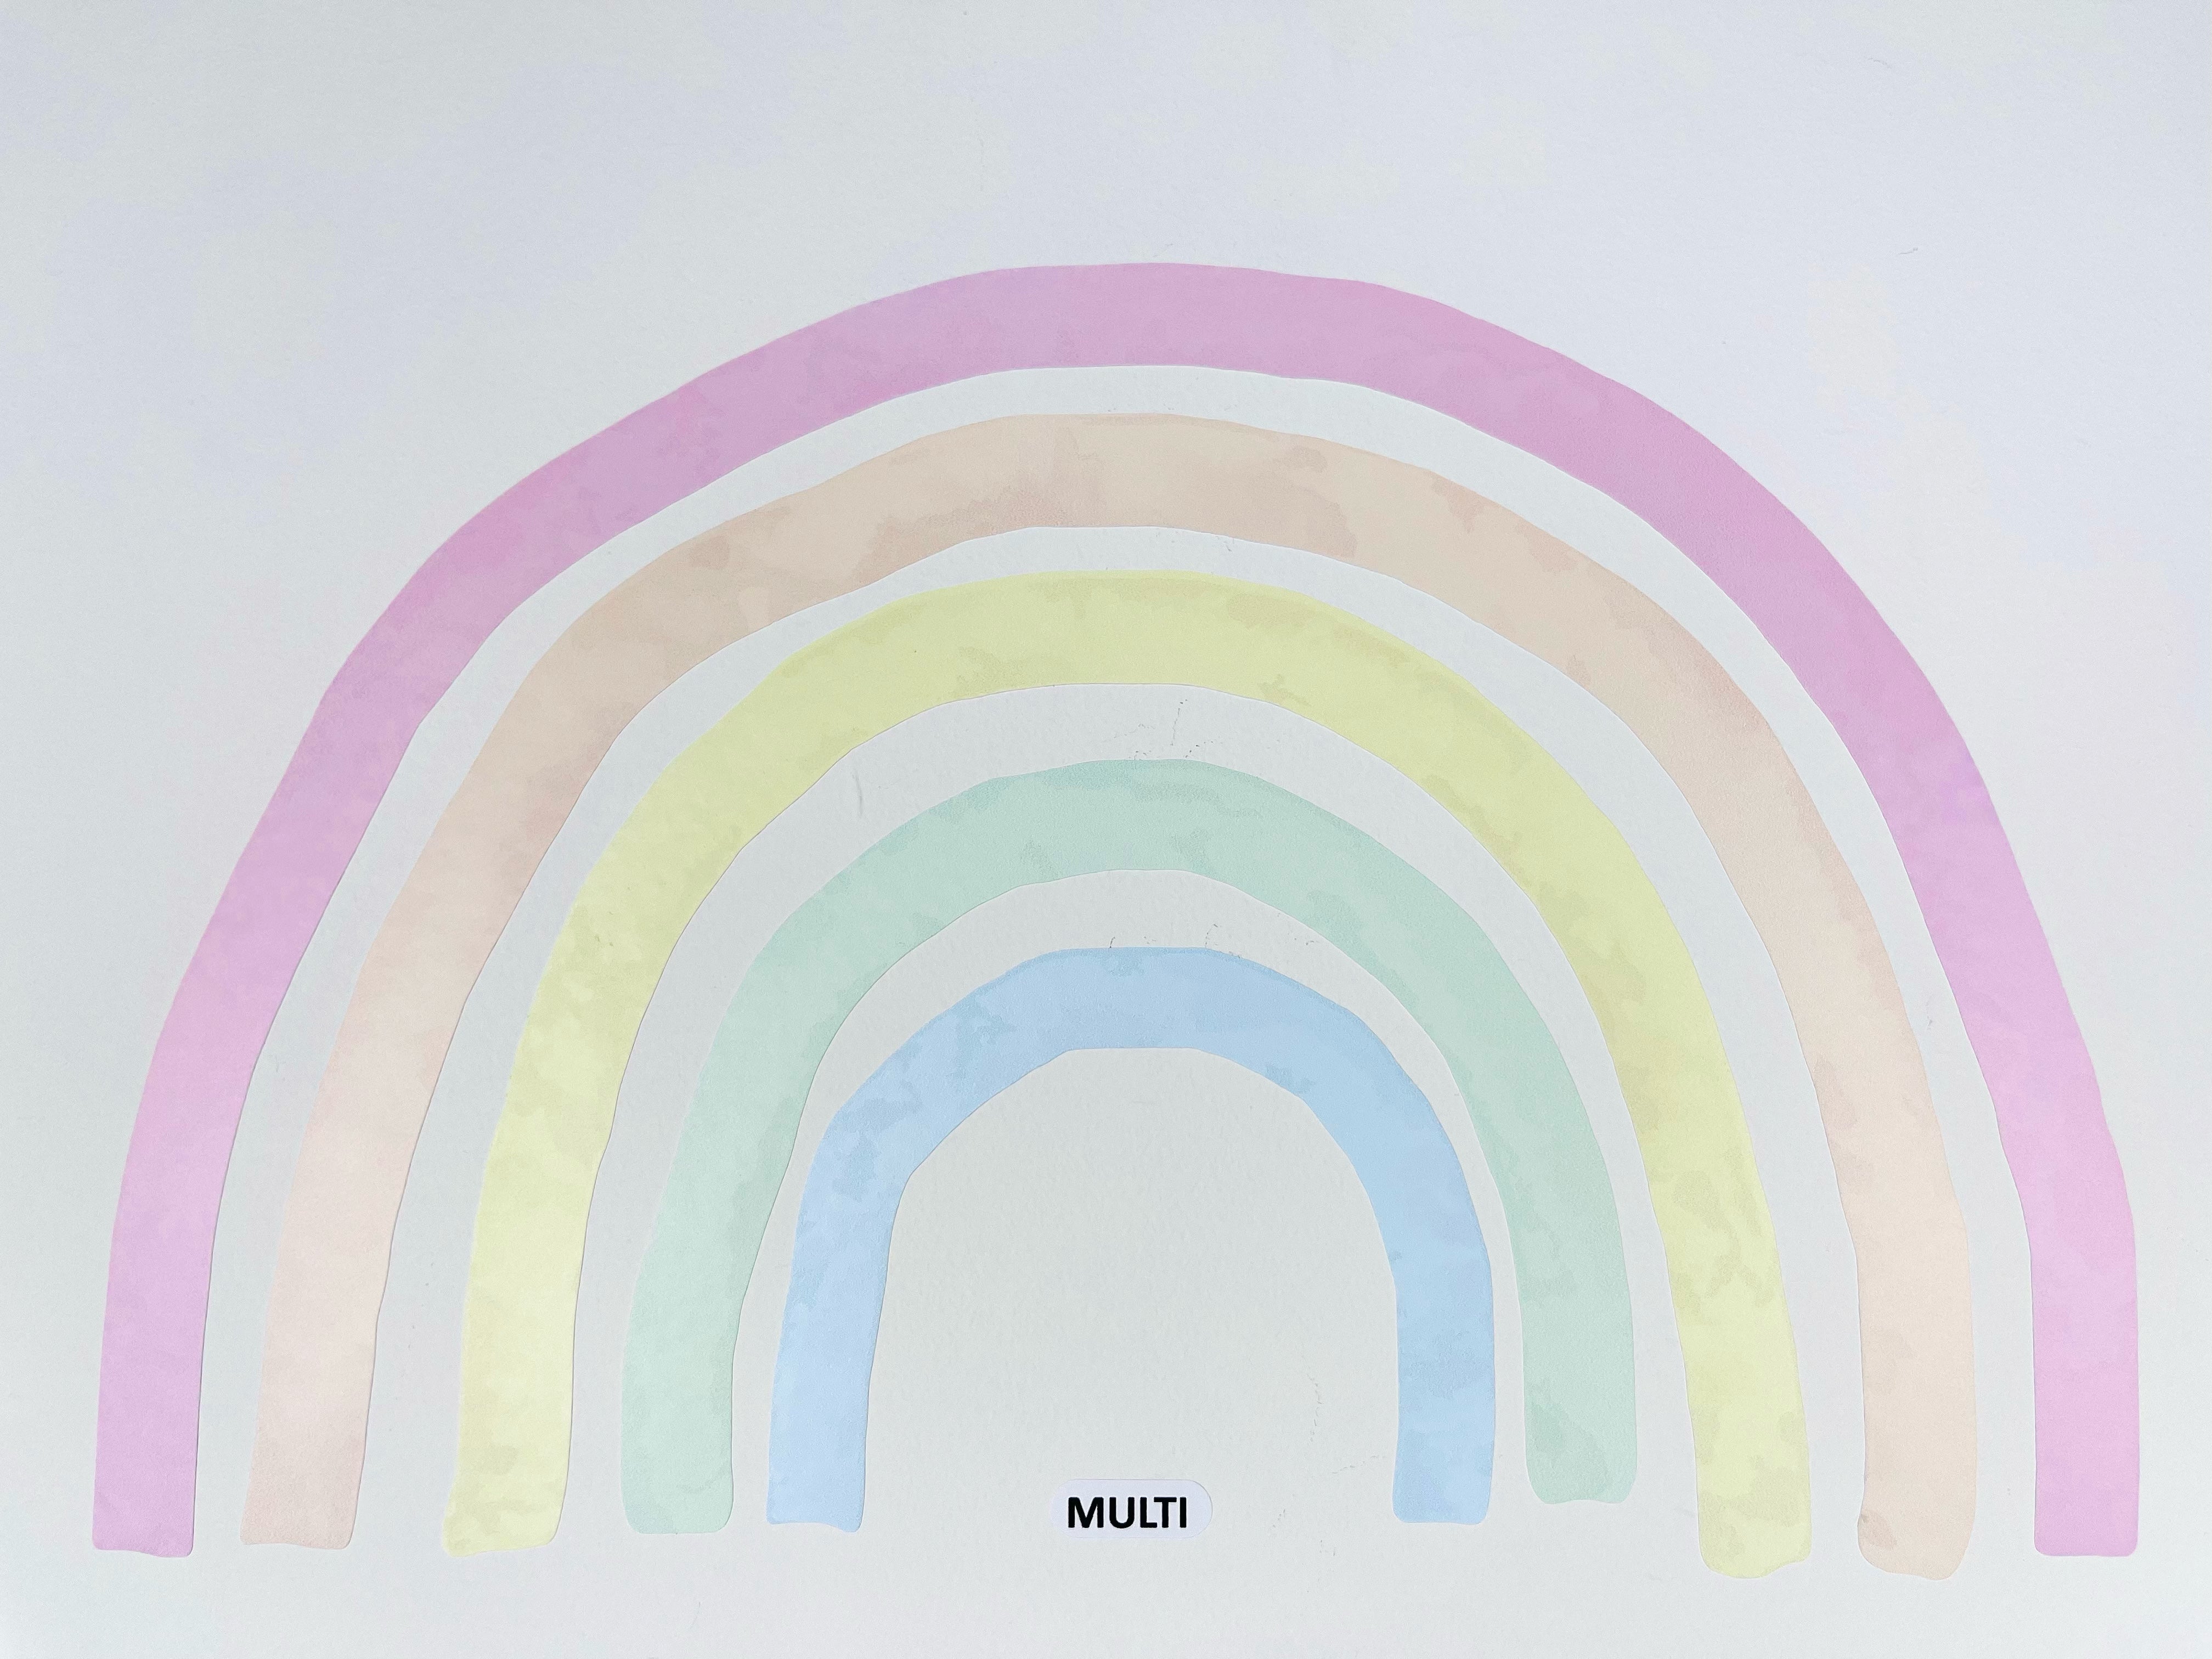 Swatch image of Multi rainbow